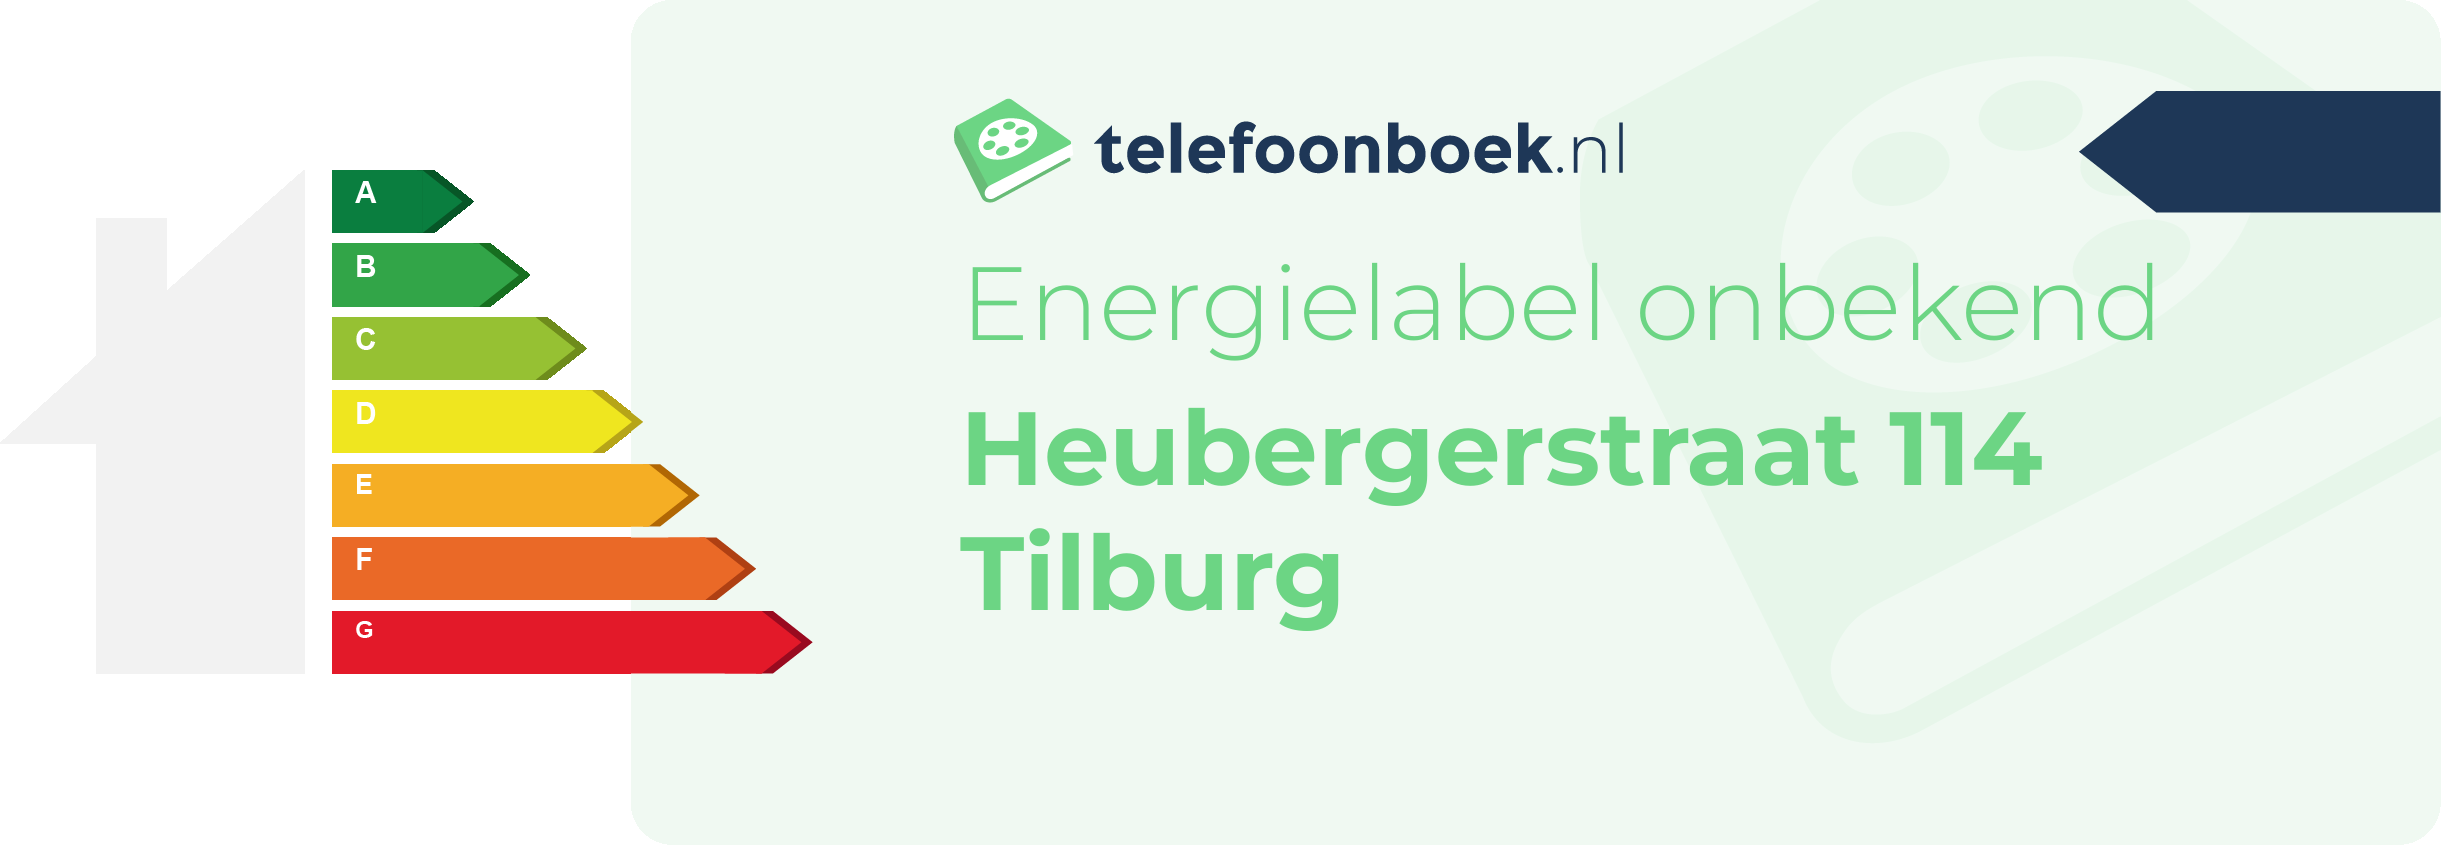 Energielabel Heubergerstraat 114 Tilburg